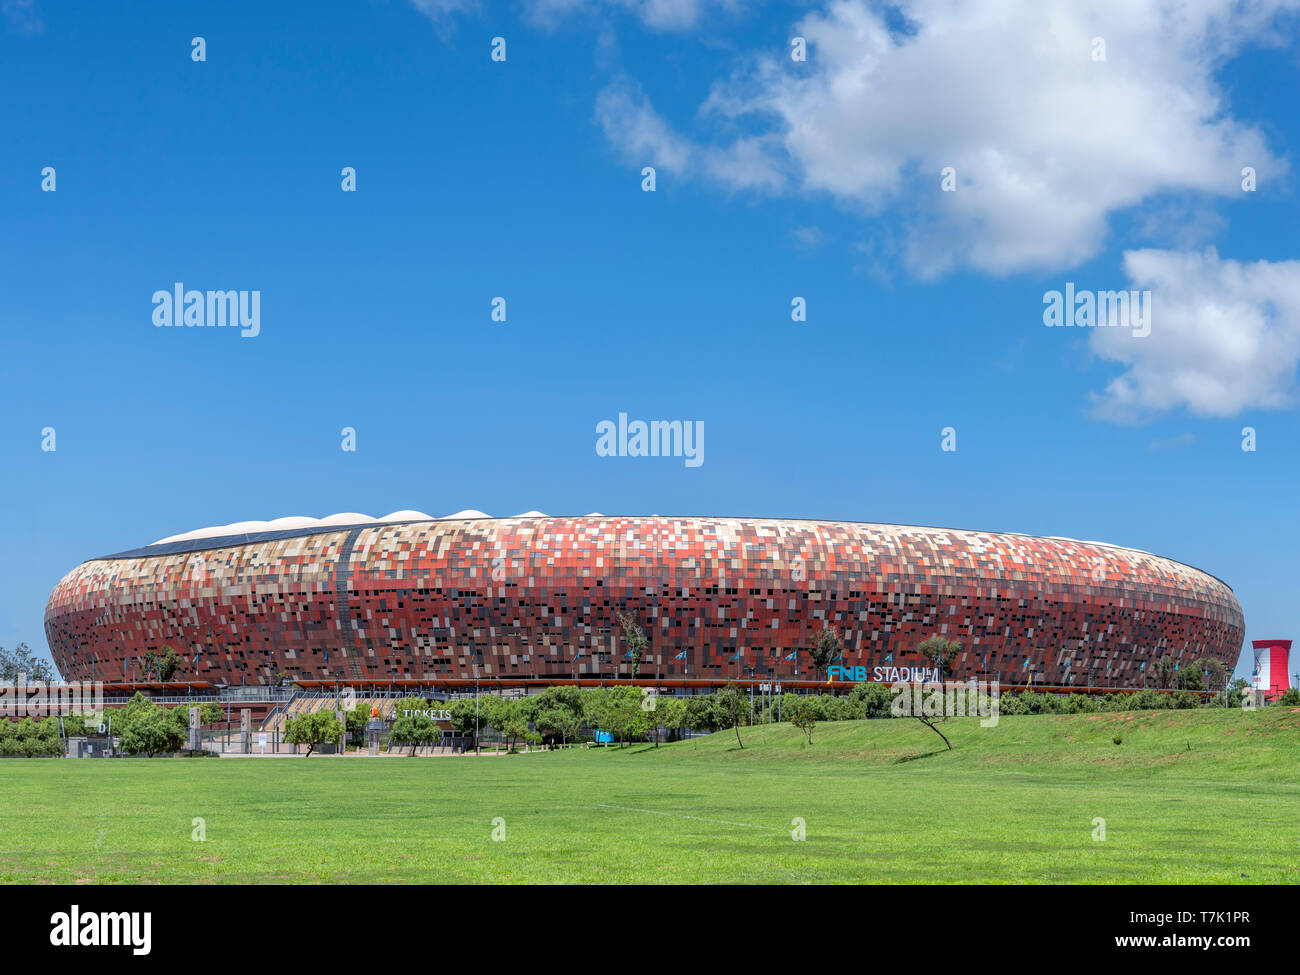 La FNB Stadium, Nasrec, Soweto, Johannesburg, Sud Africa Foto Stock